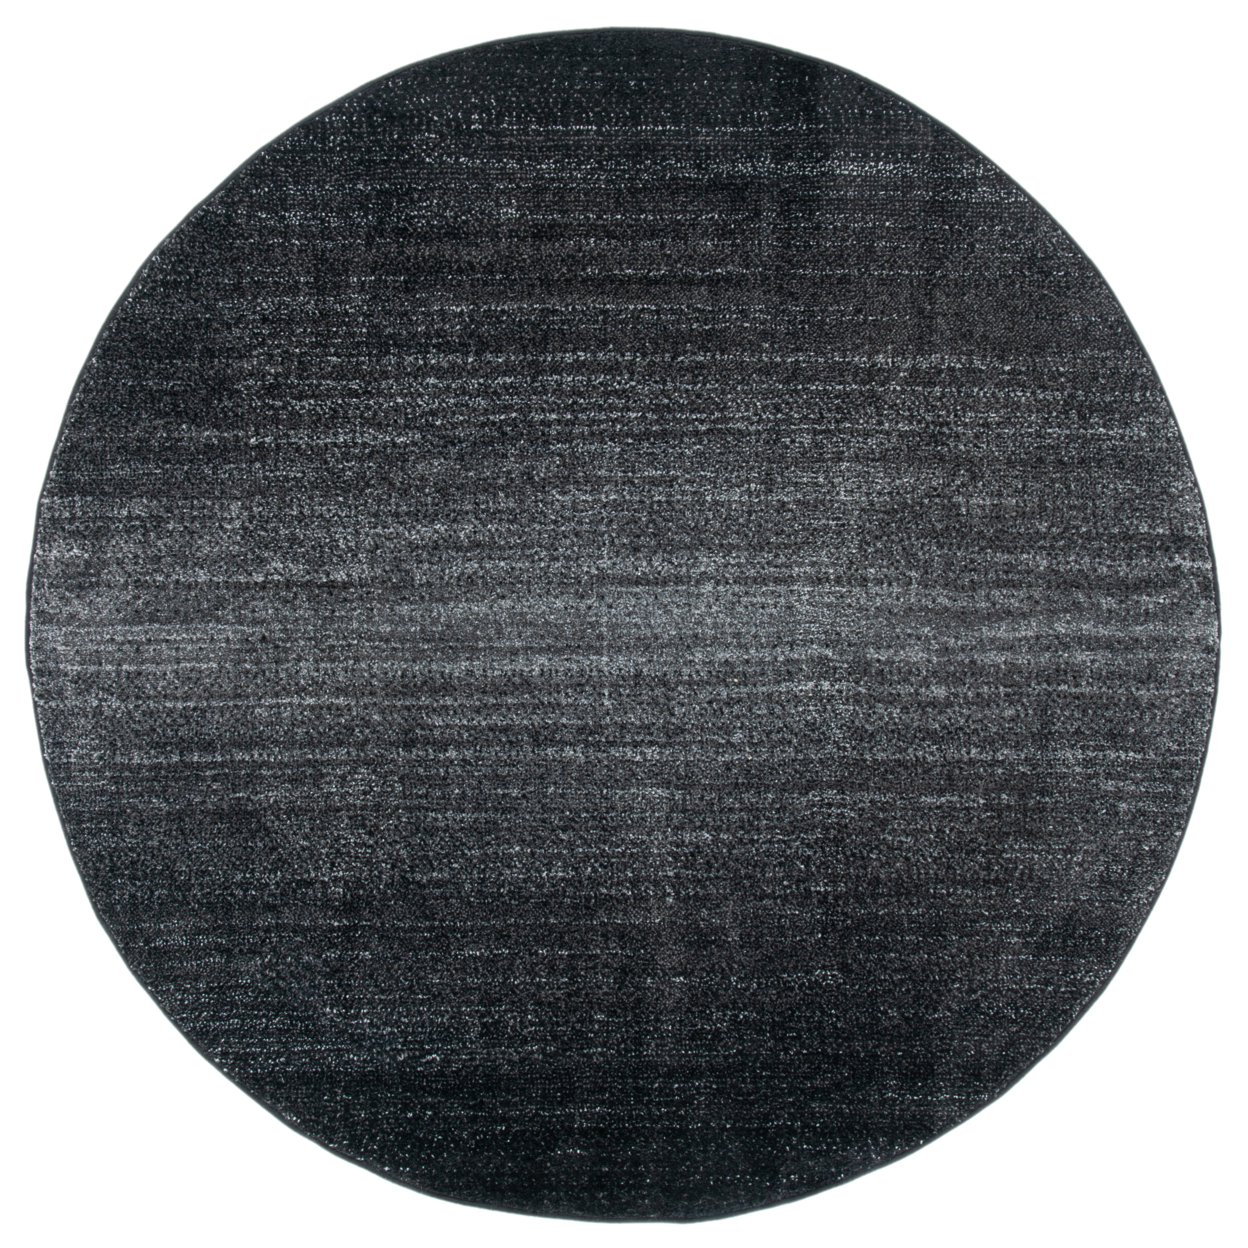 SAFAVIEH ADR183F Adirondack Black / Grey - 4' X 6'